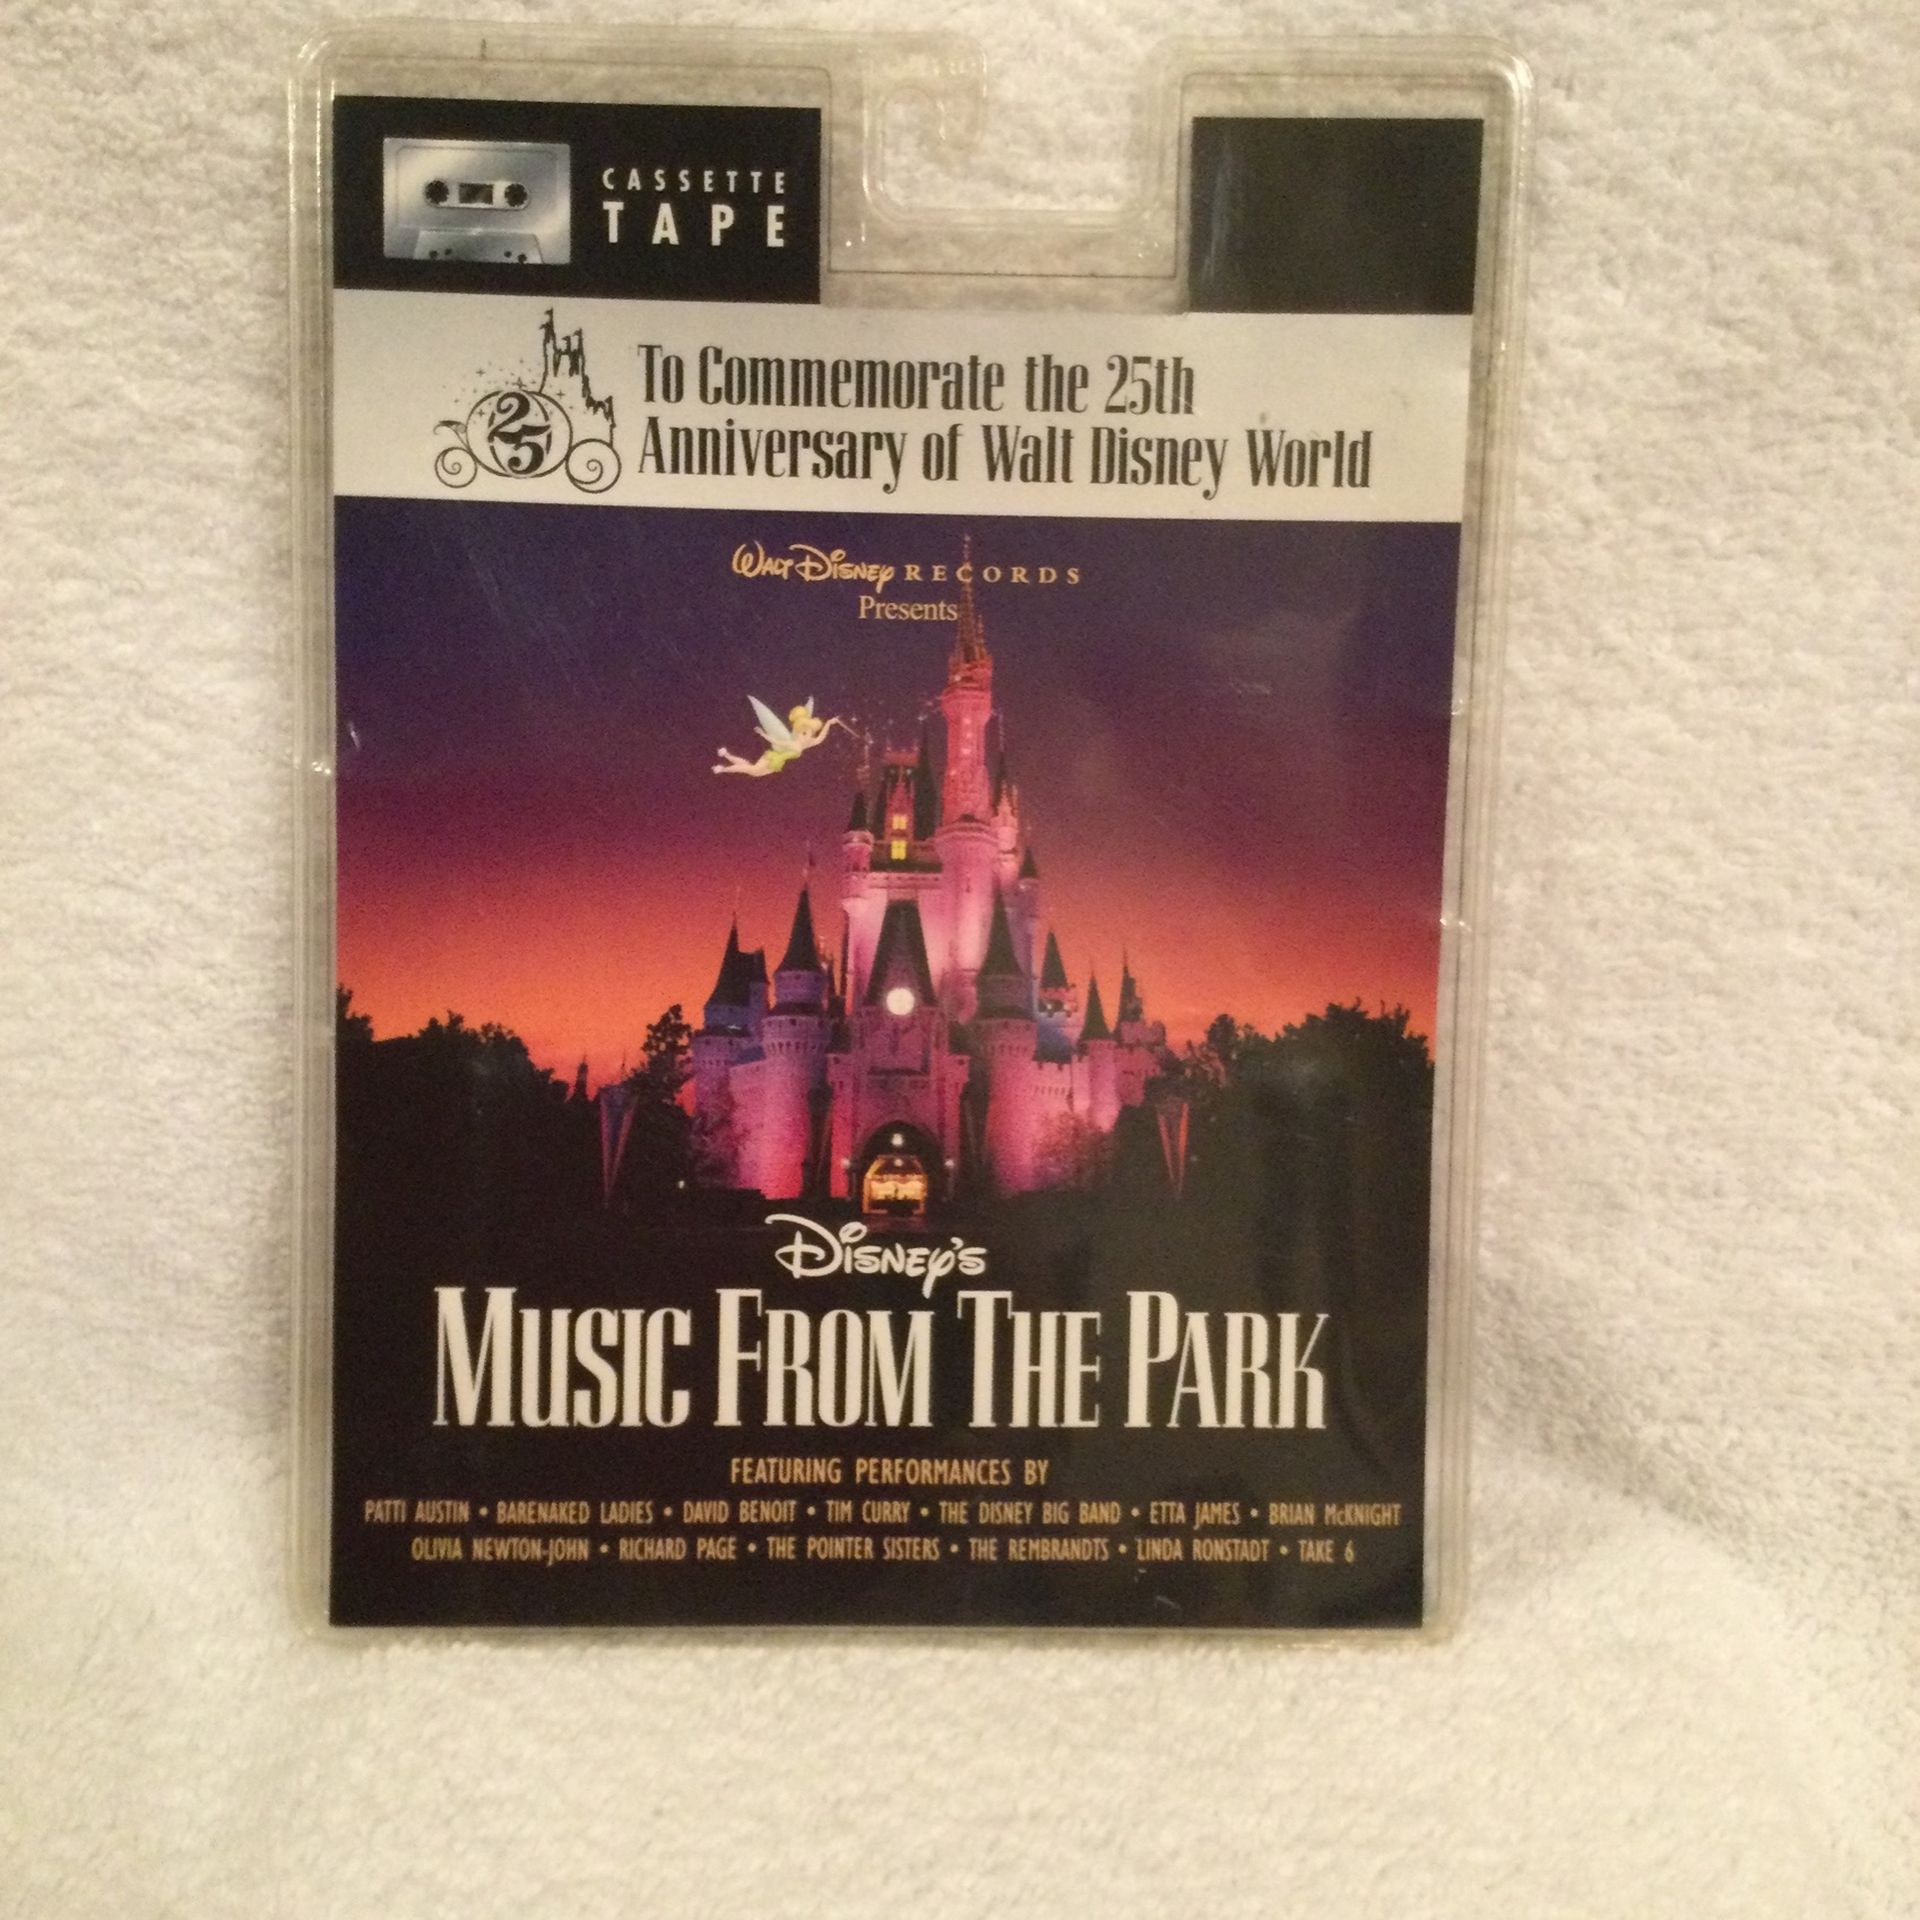 1996 Disney’s Music For The Park Cassette New In Blister Pack Commemorate 25th Anniversary